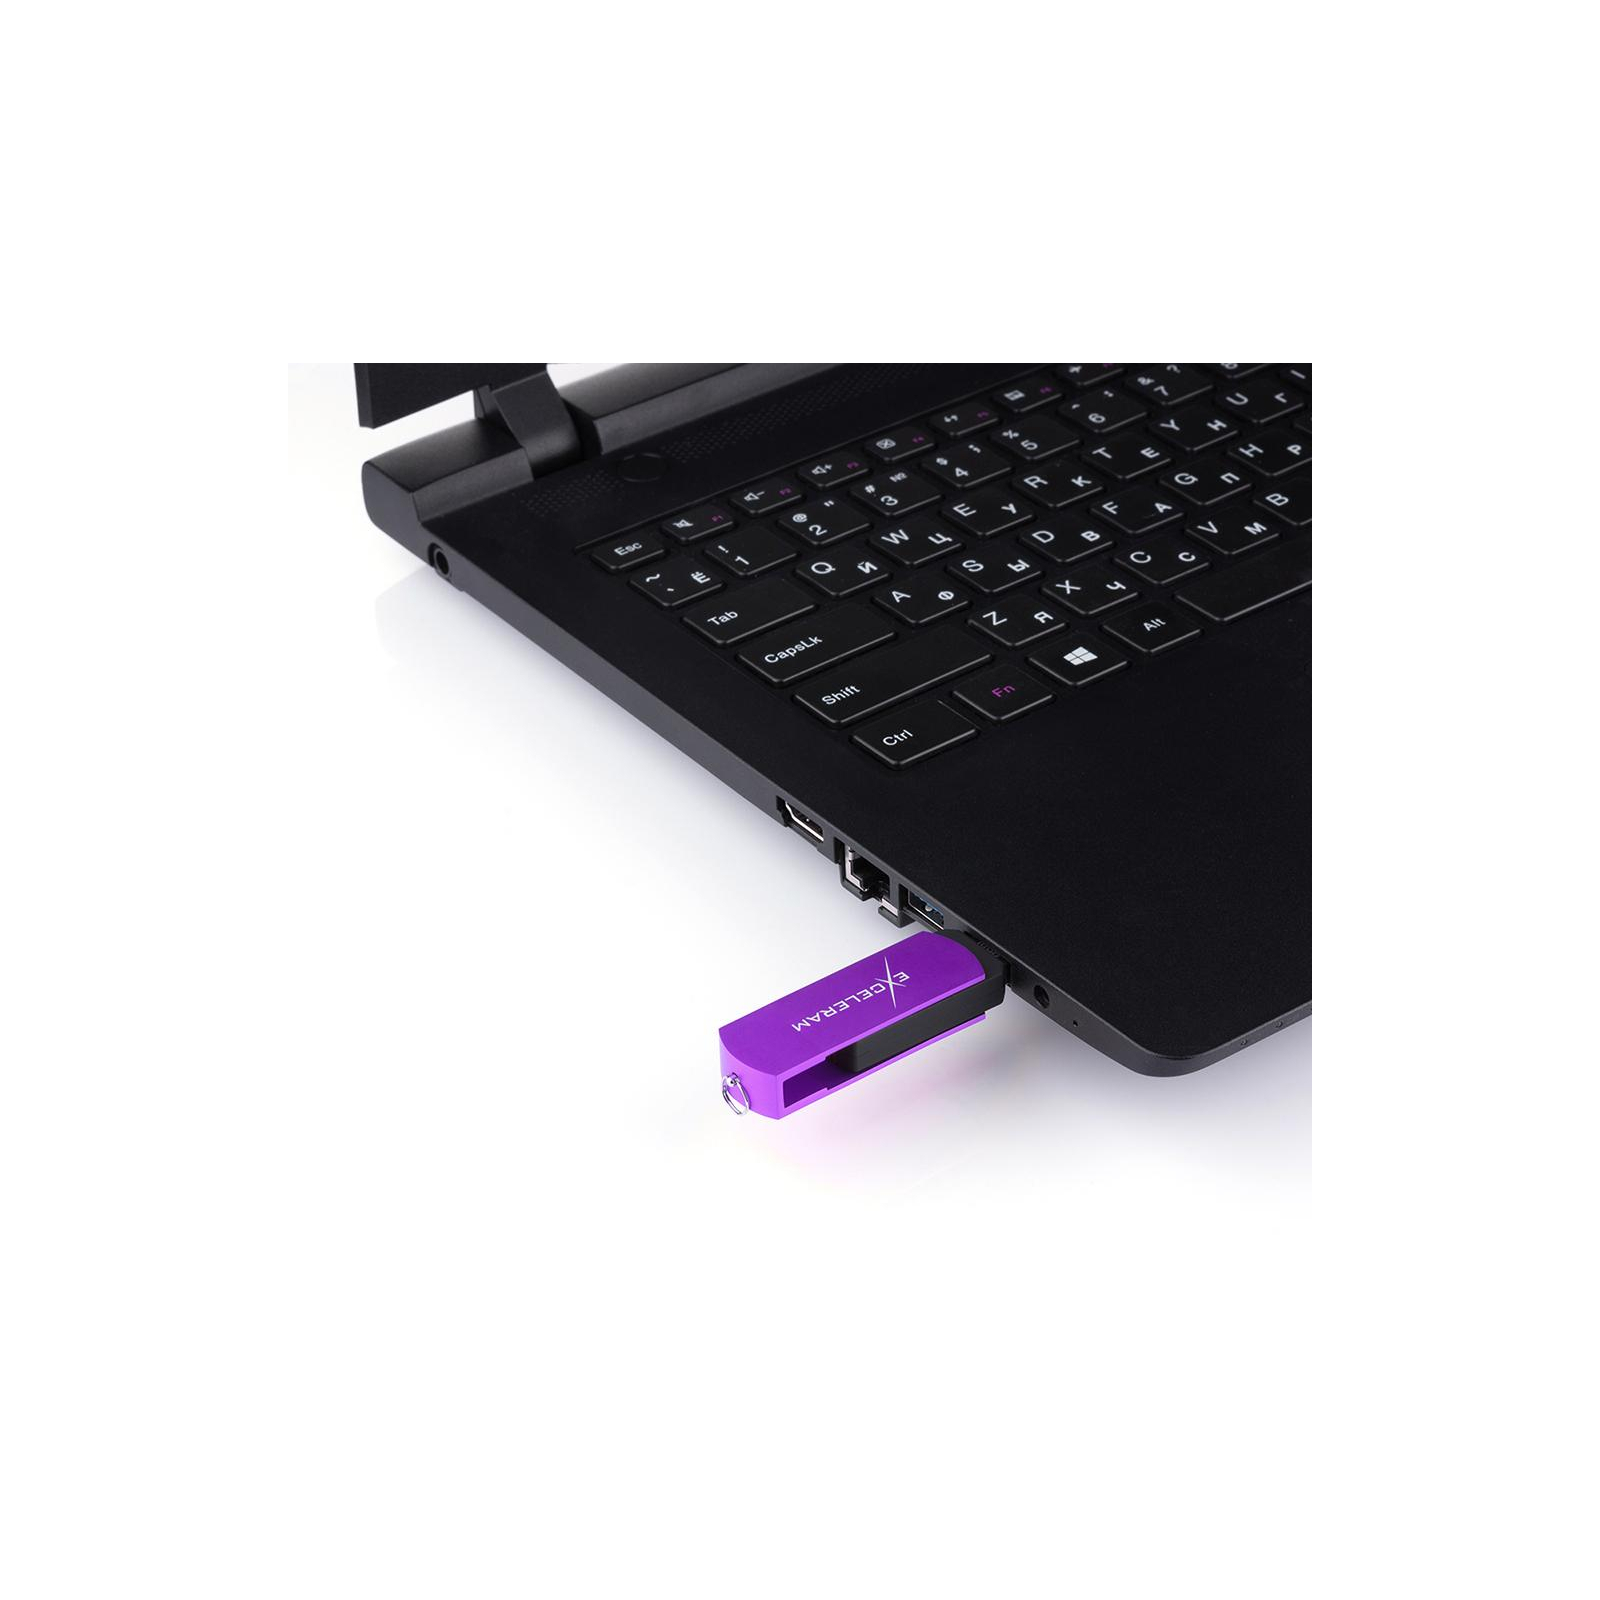 USB флеш накопитель eXceleram 64GB P2 Series Grape/Black USB 2.0 (EXP2U2GPB64) изображение 7